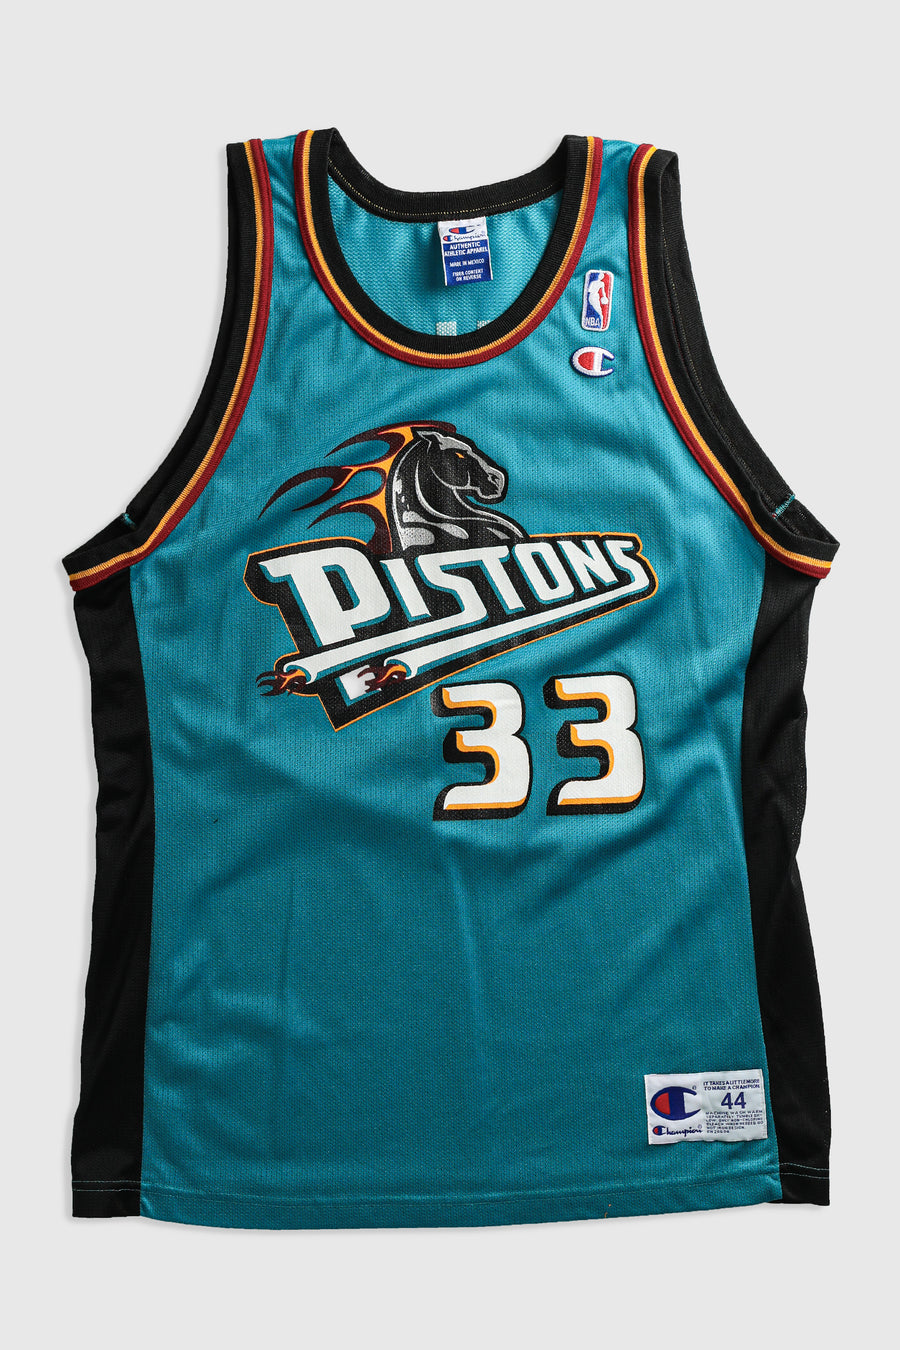 Vintage Pistons NBA Jersey